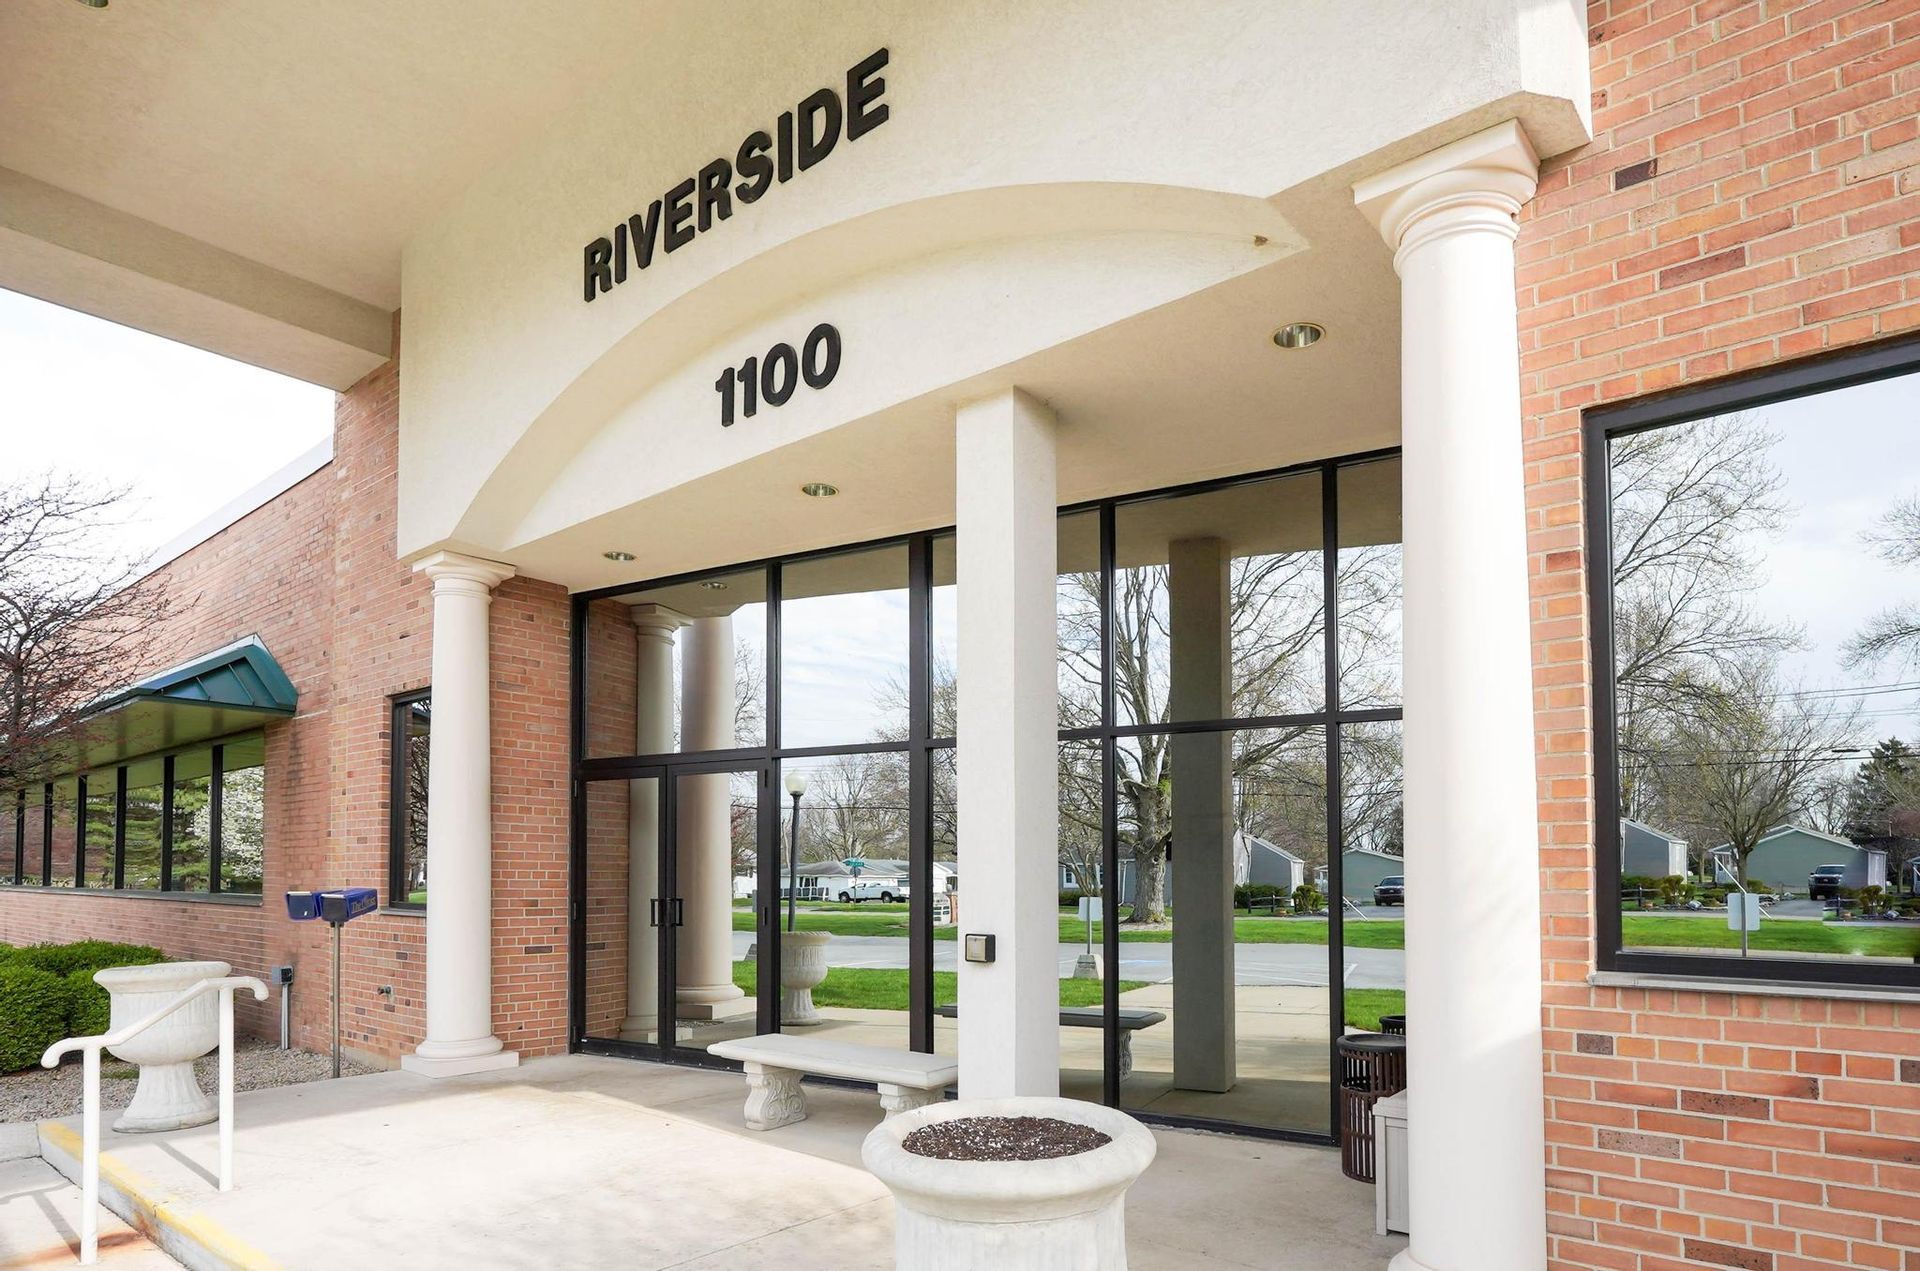 Riverside Executive Suites, 1100 East Main Cross